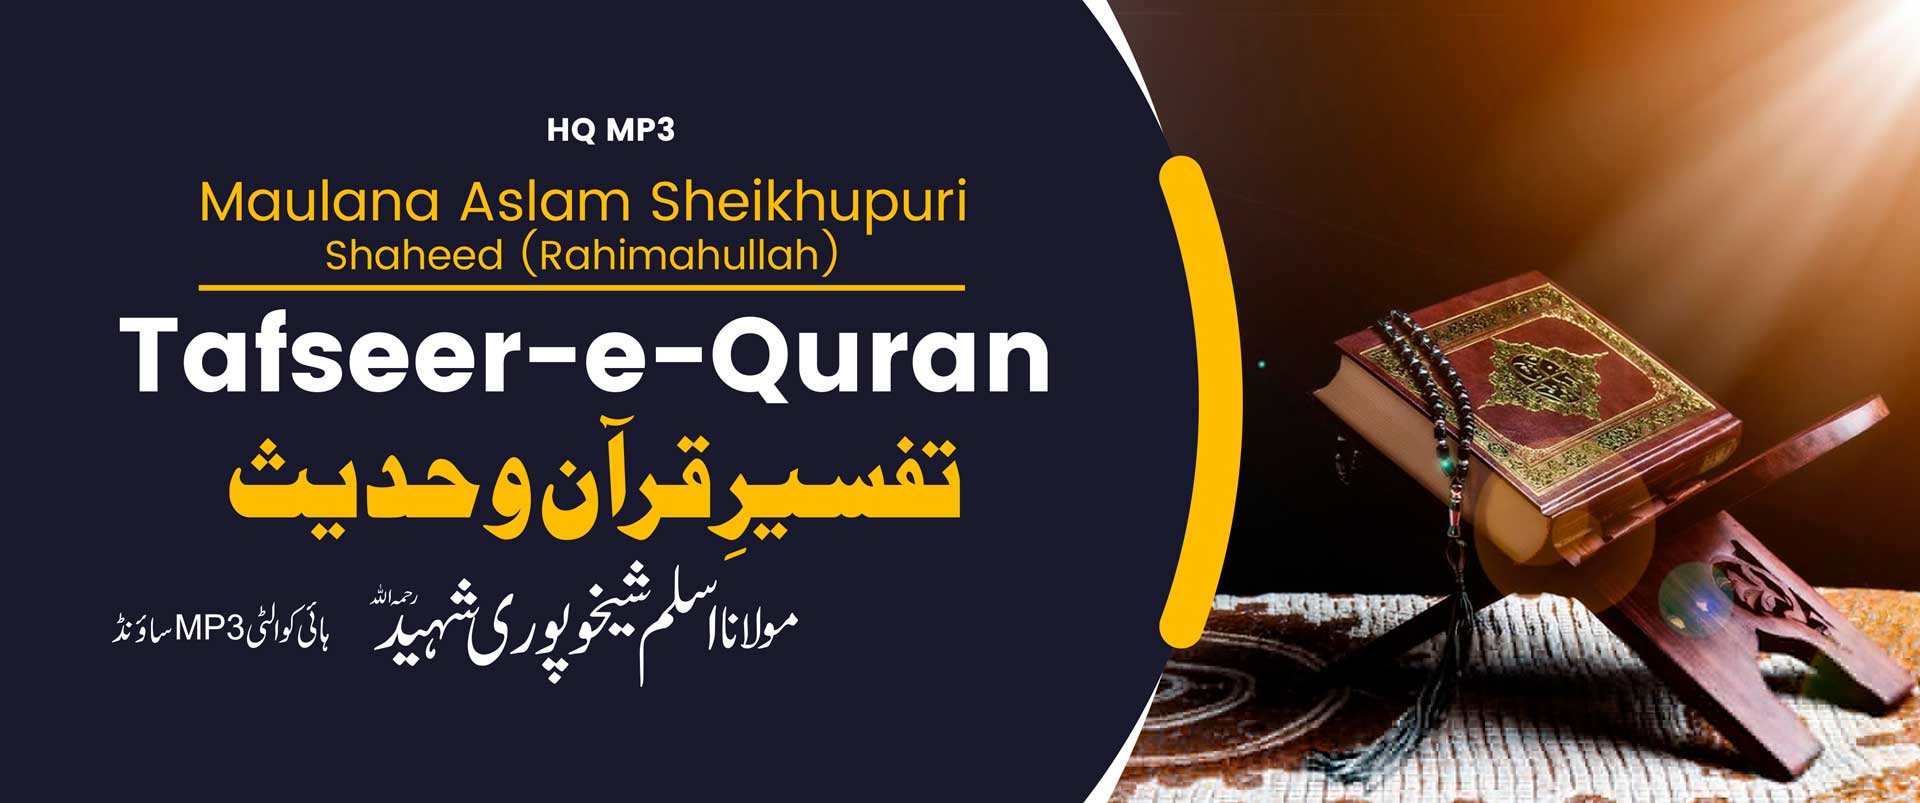 Tafseer-e-Quran Maulana Aslam Sheikhupuri